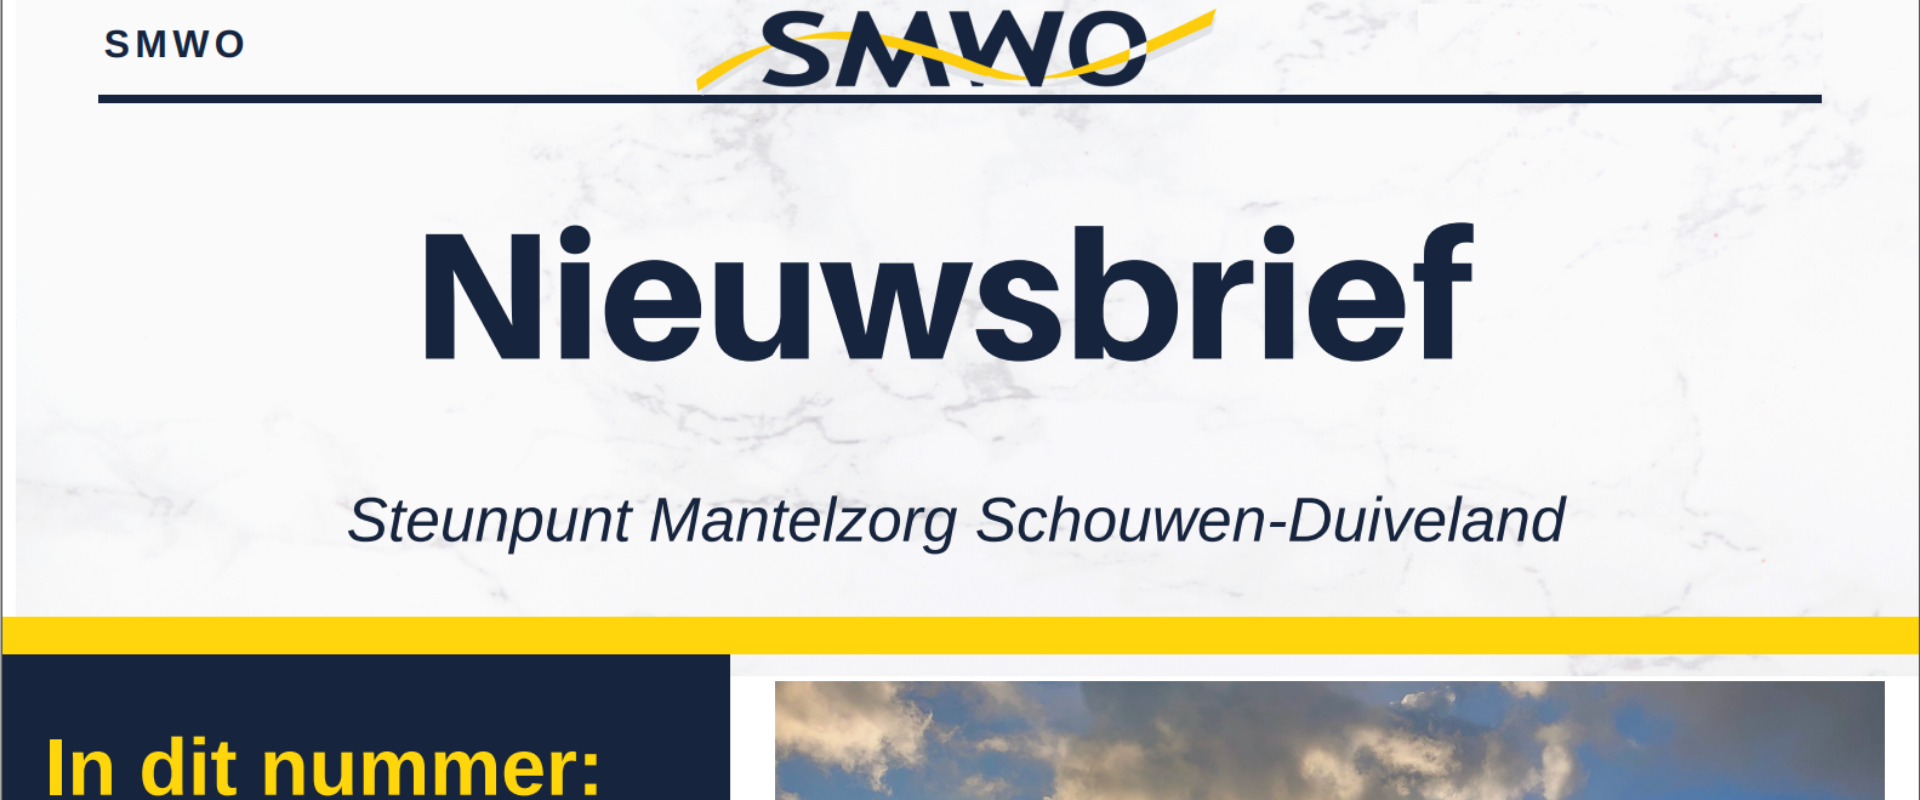 Nieuwsbrief mantelzorg SMWO Schouwen-Duiveland